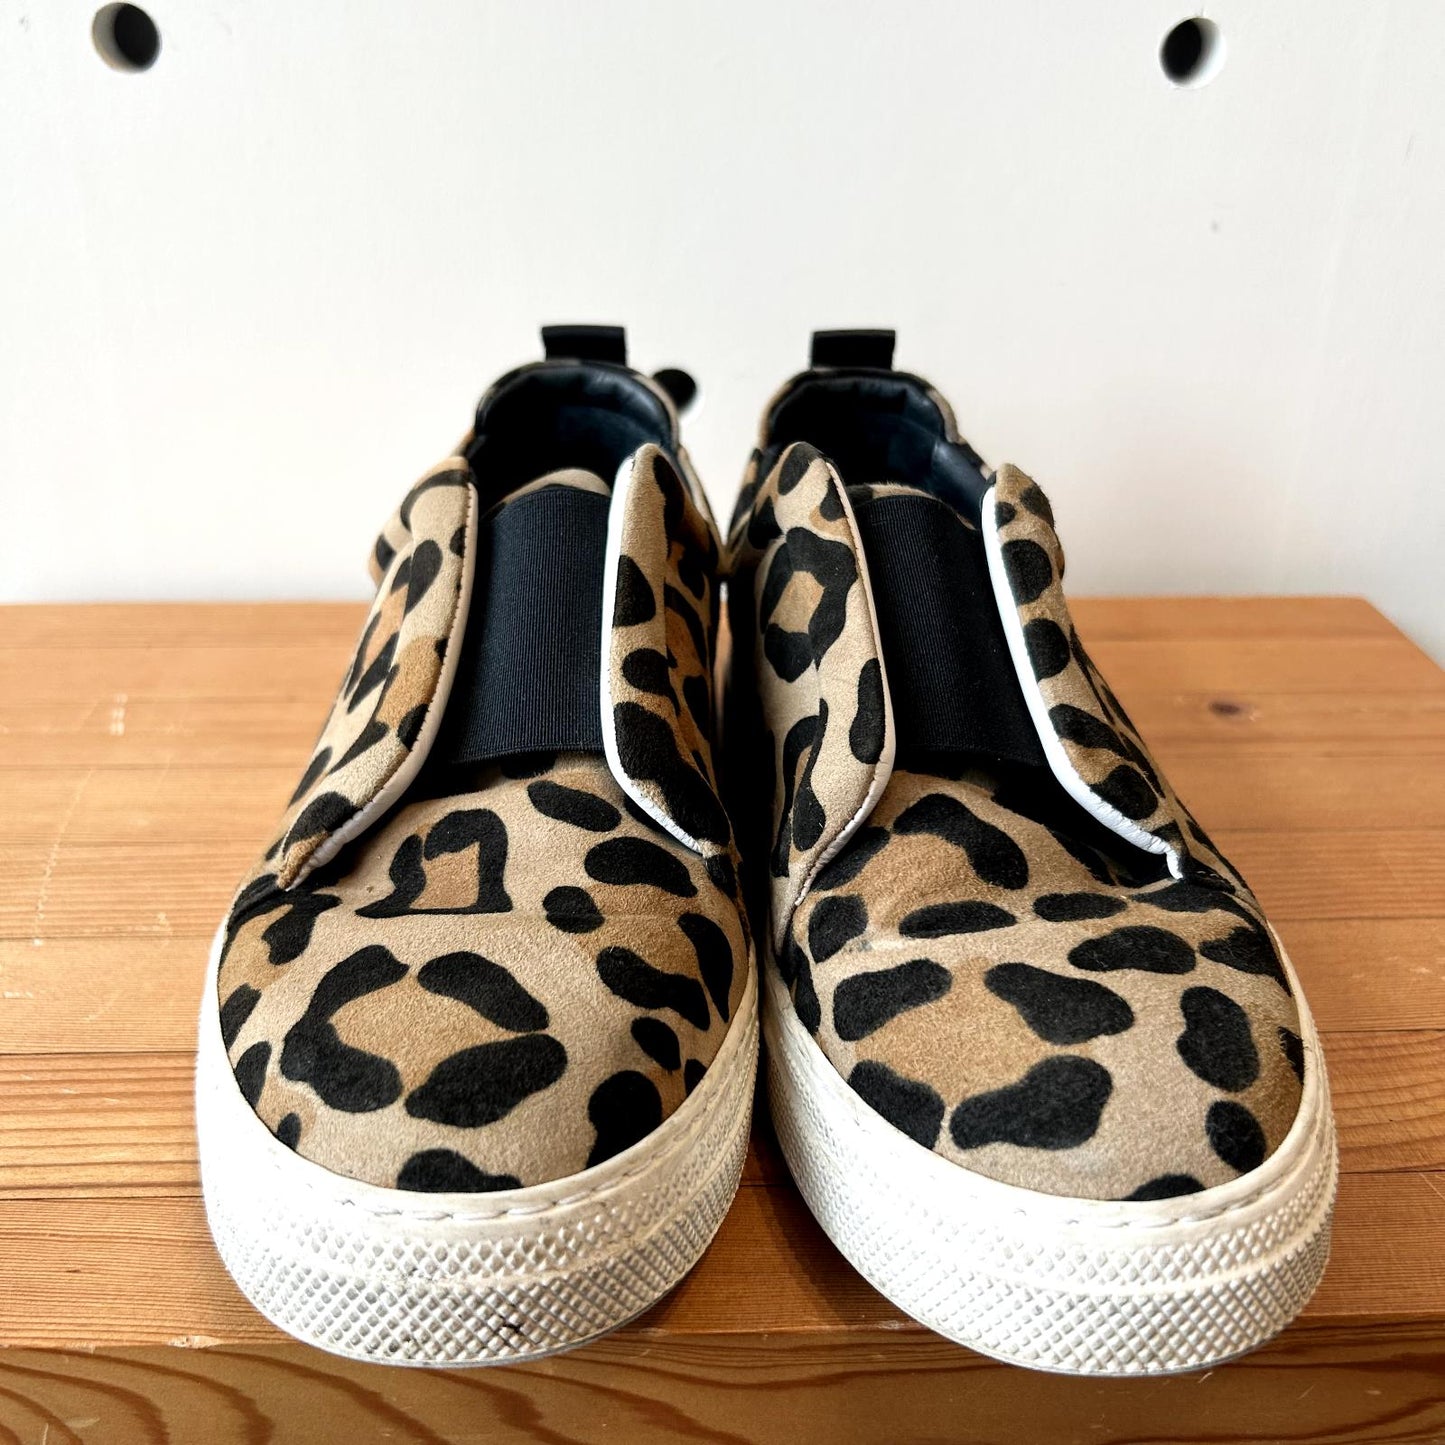 39 / 8.5 - Pierre Hardy Leopard Print Suede Baskets Slider Shoes Sneakers 1126GT